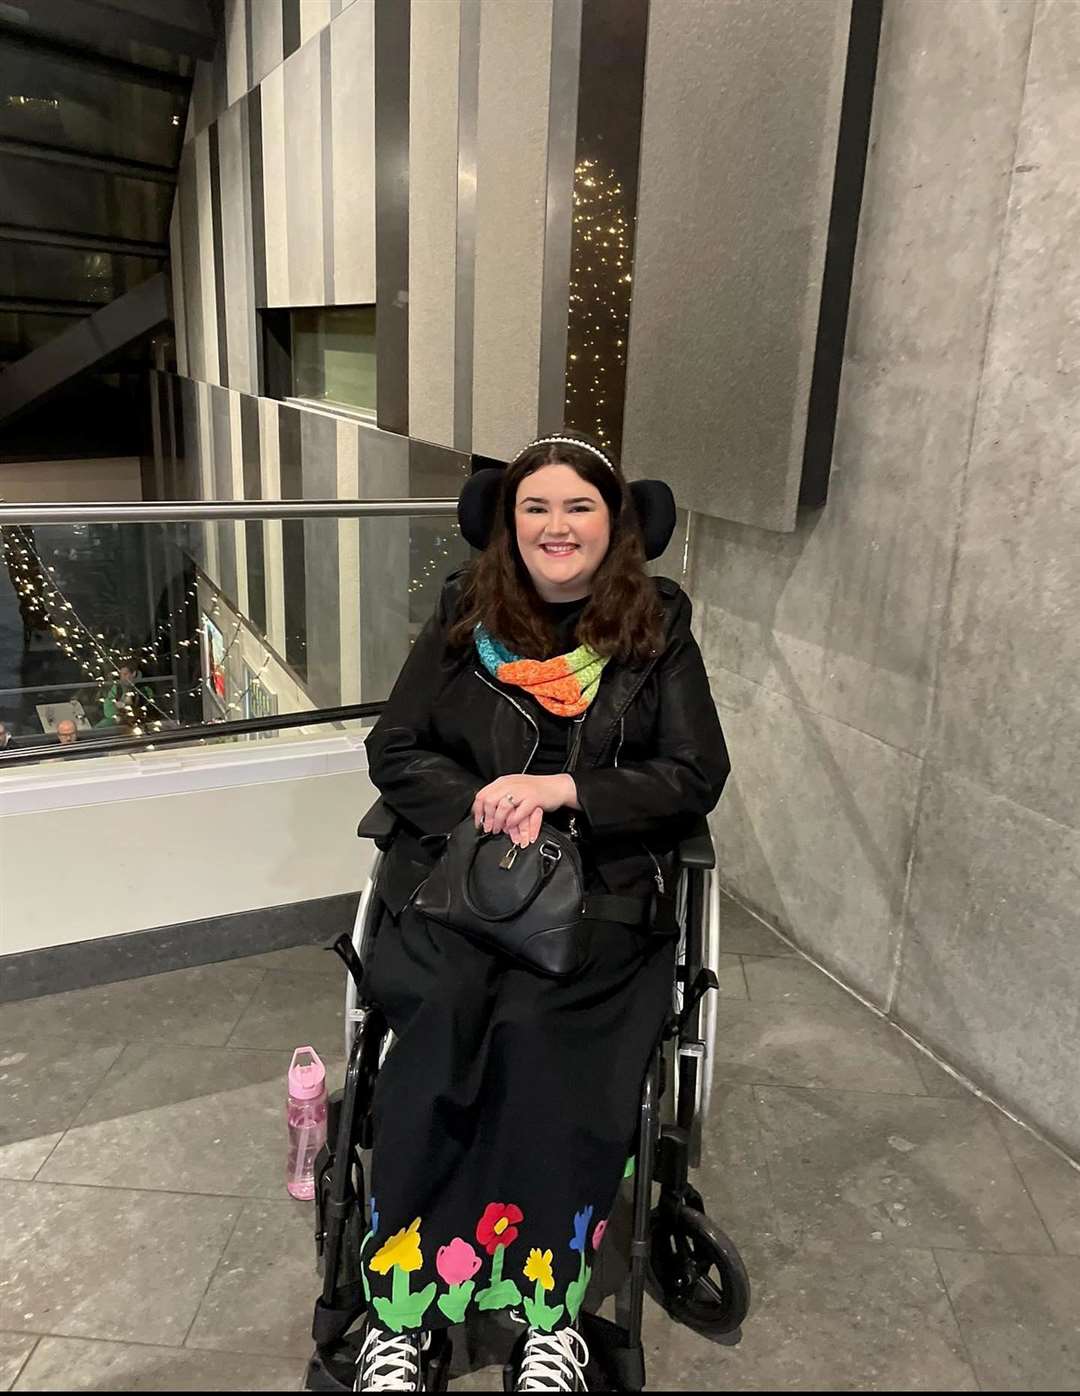 Regan Kelly in her wheelchair.